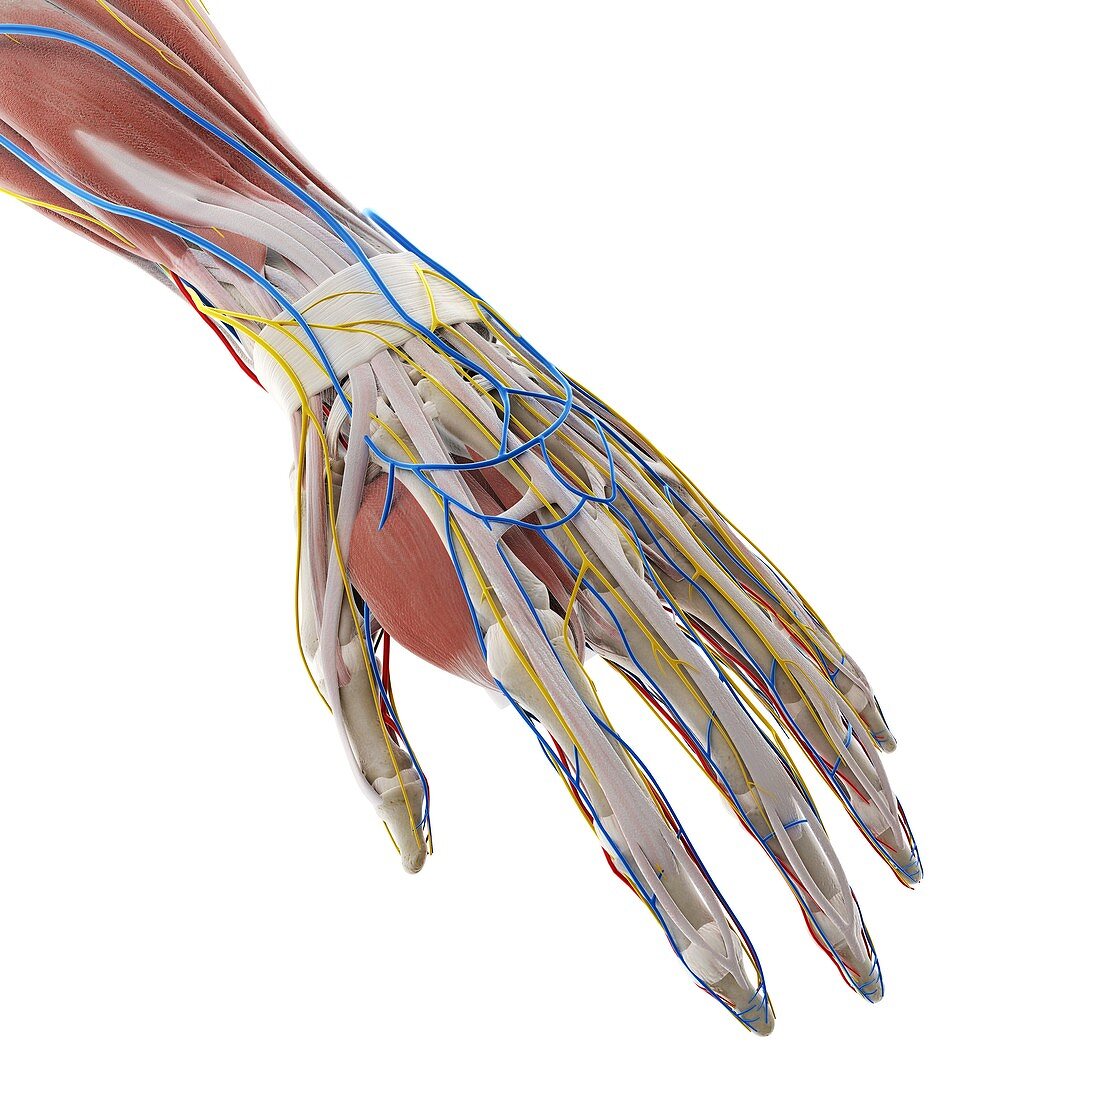 Anatomy of the hand, illustration